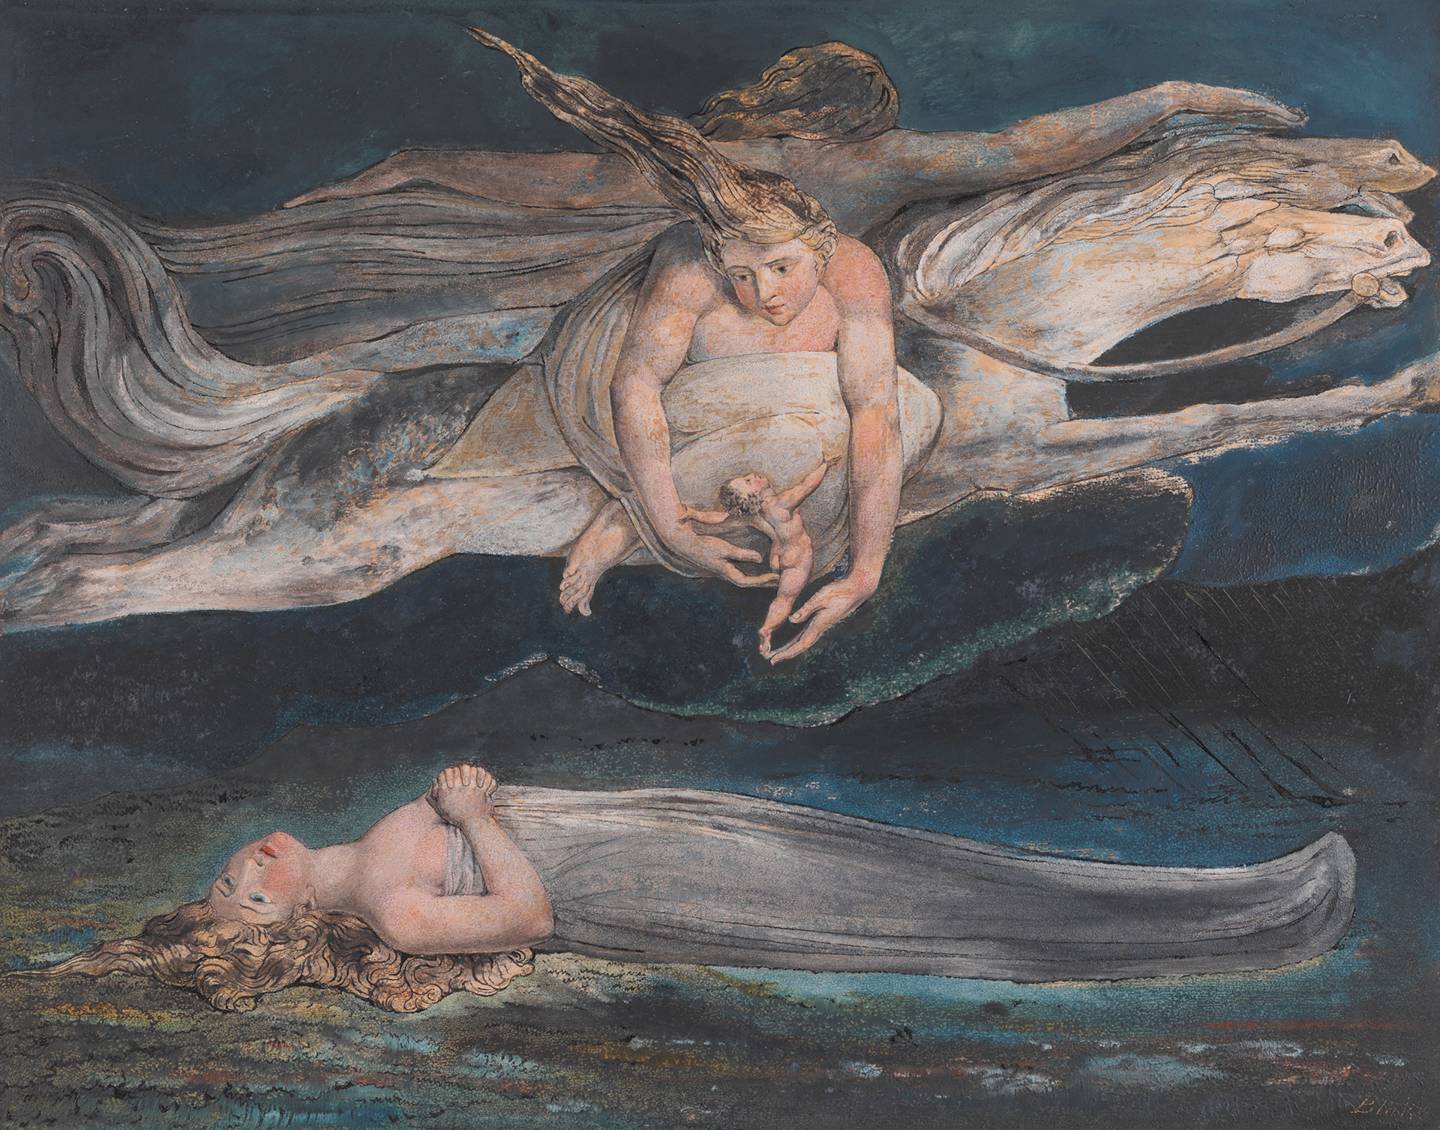 William Blake Exhibition Opens At The Tate Britain Tatler